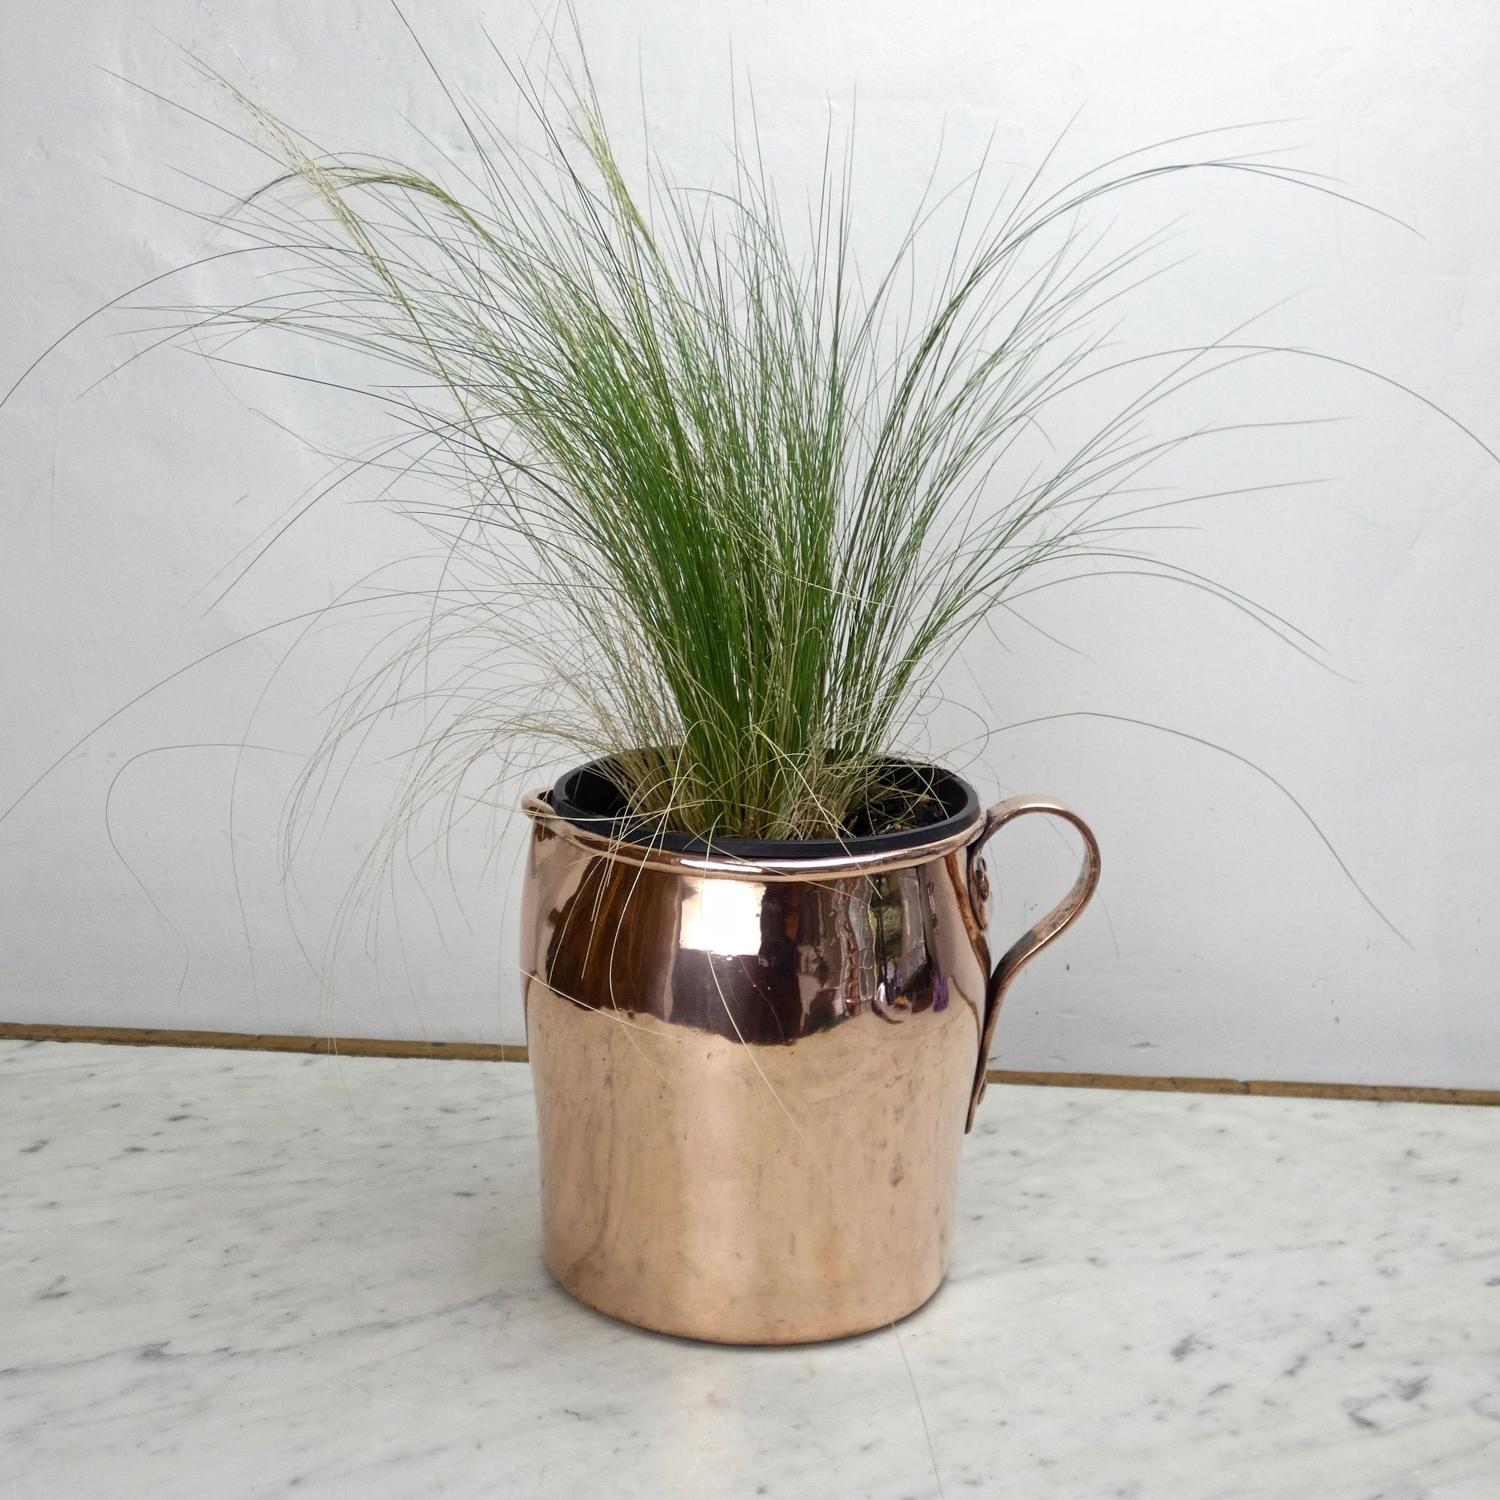 Unusual shaped copper jug